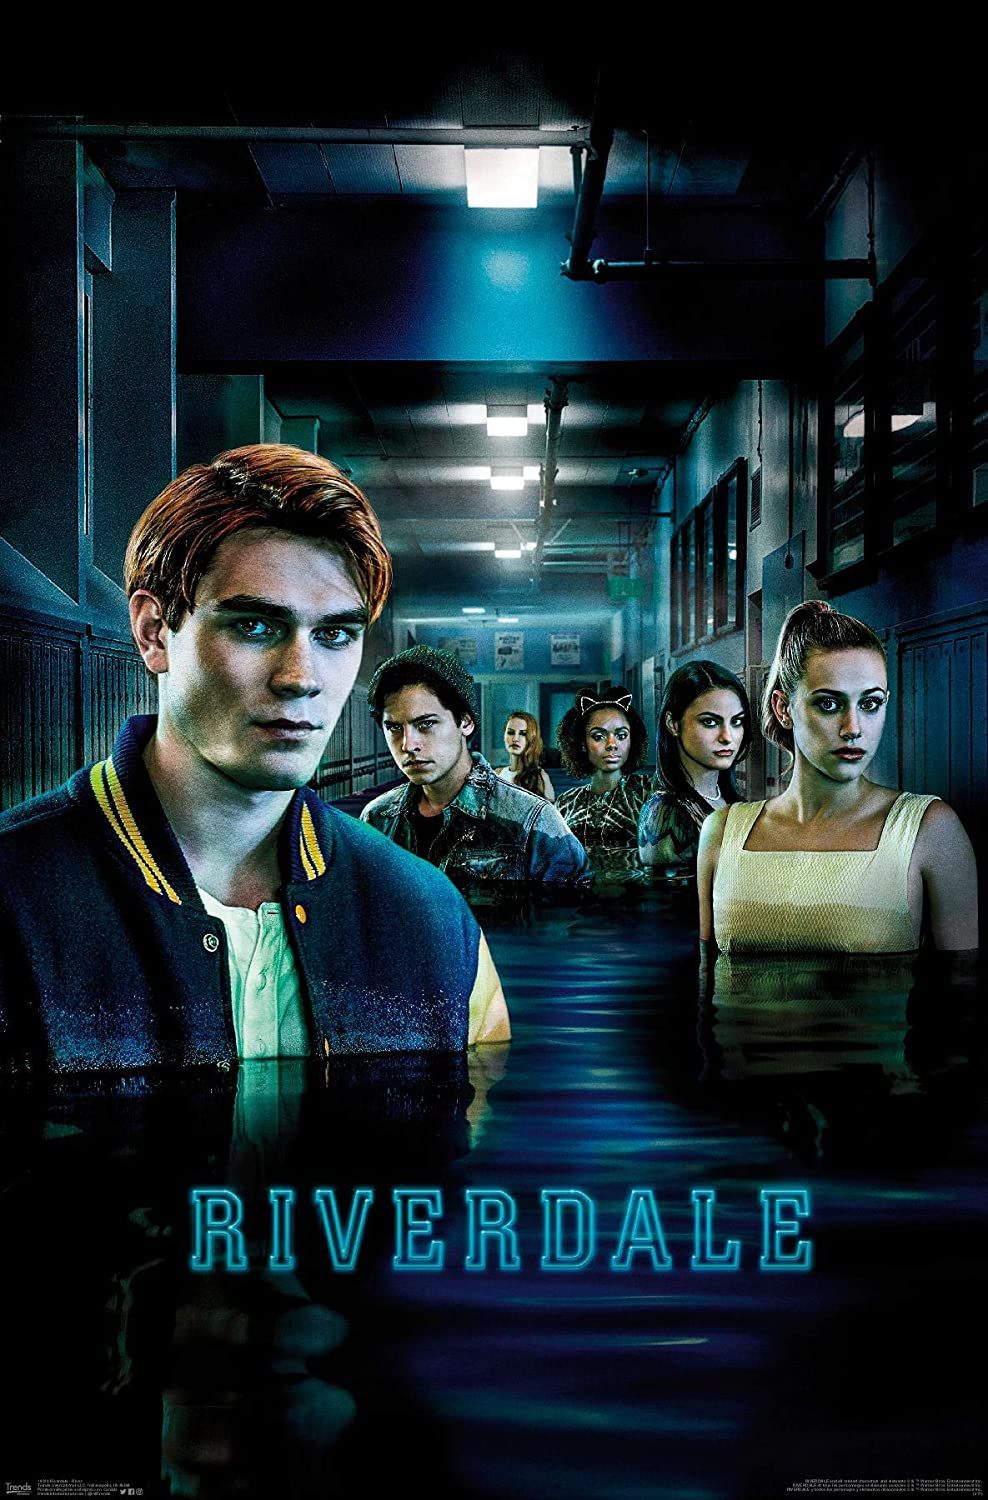 Riverdale 6 Temporada Fecha de Finalización en The Cw + fecha oficial de lanzamiento en Netflix + Confirmación de 7 Temporada